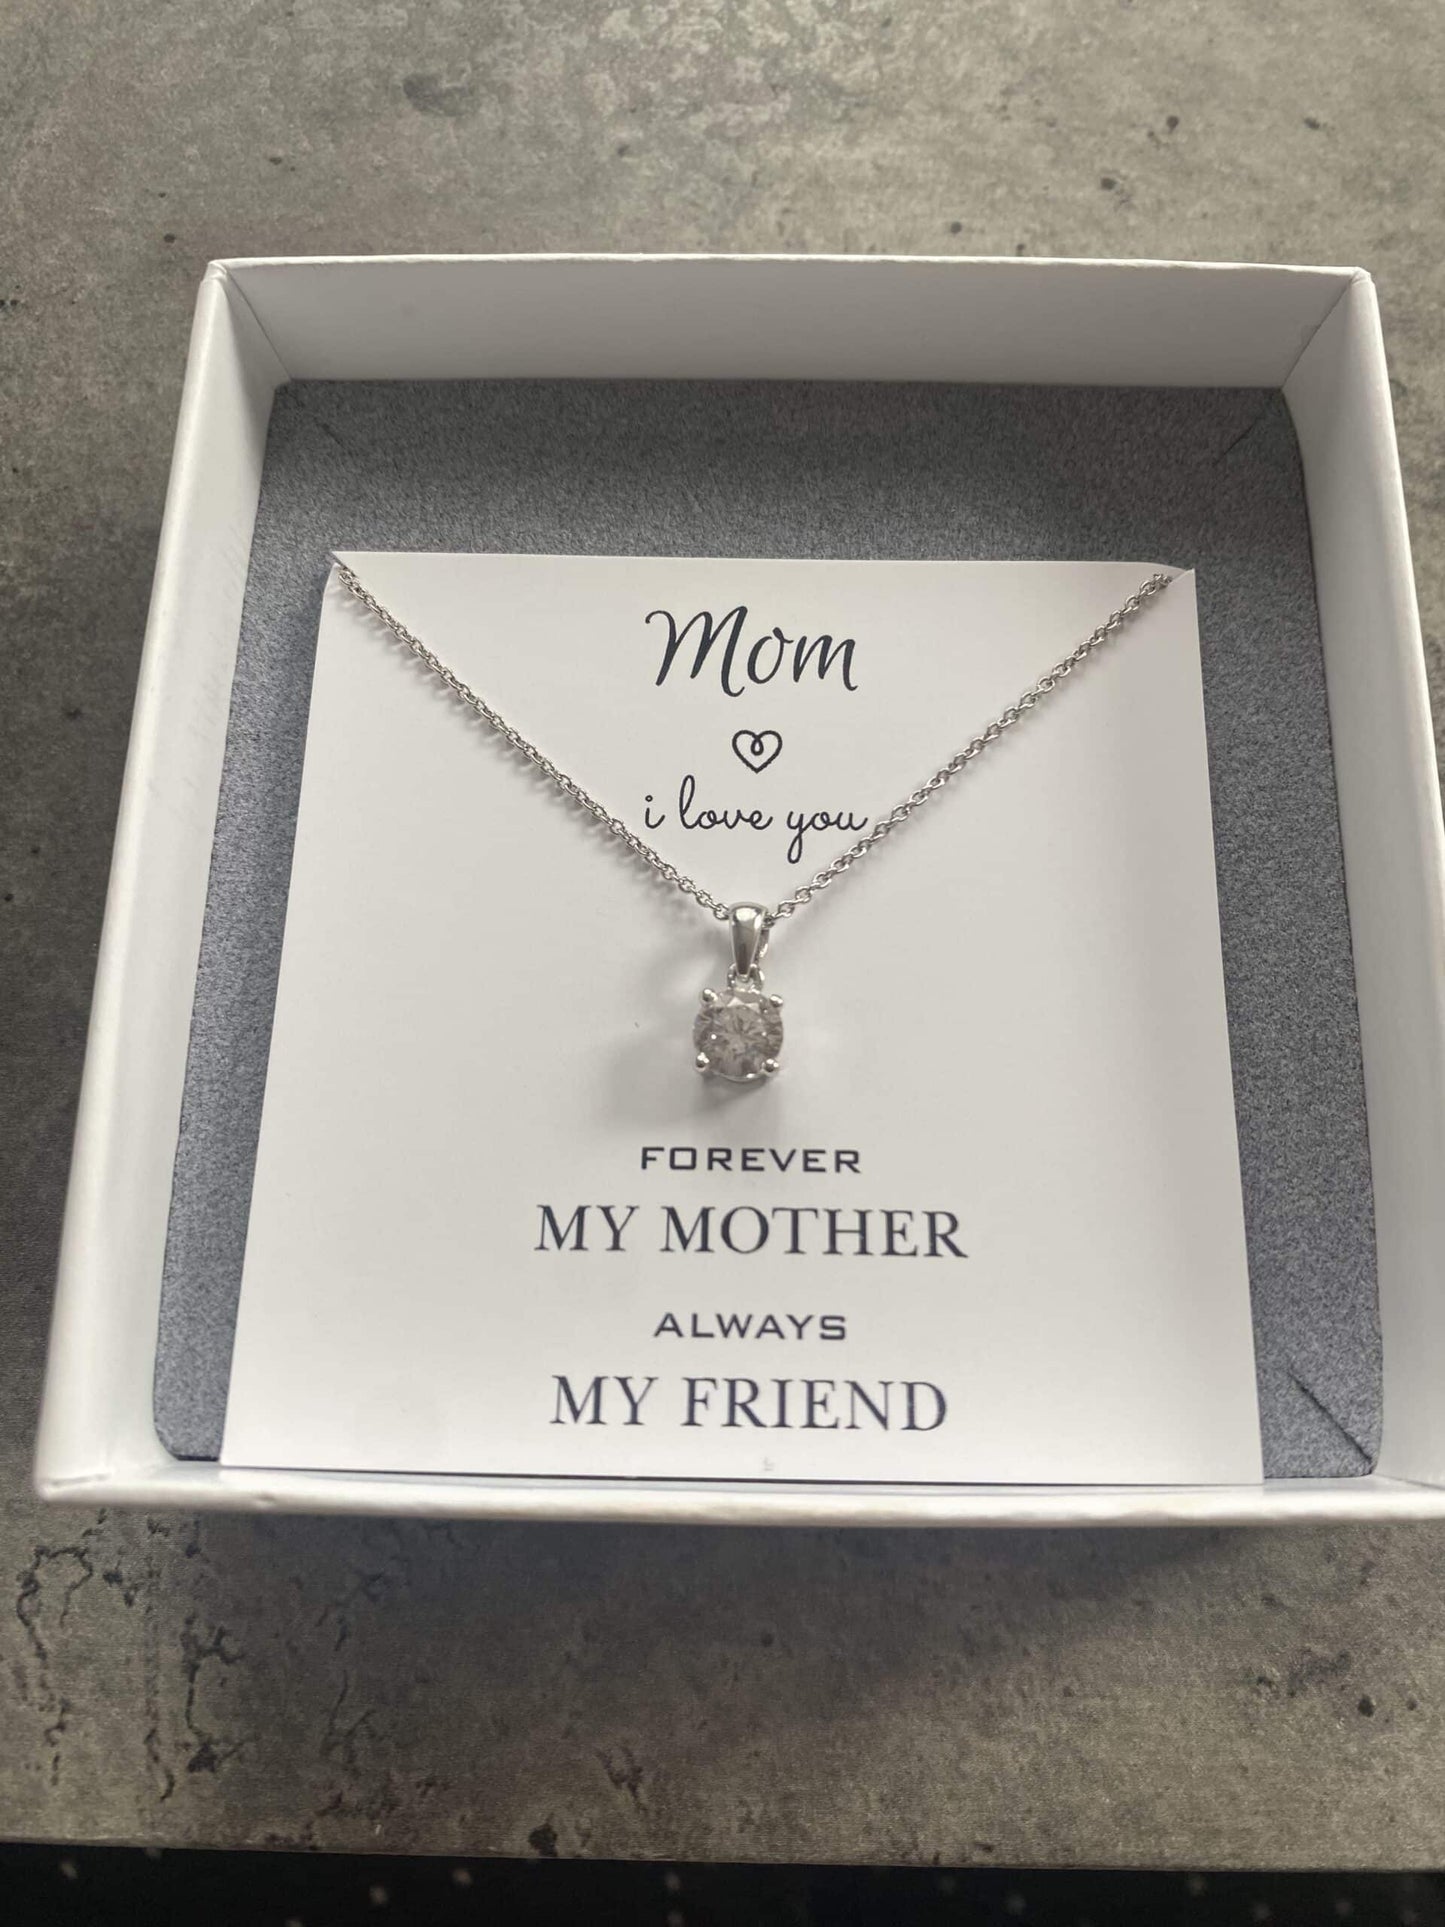 Mom jewelry card